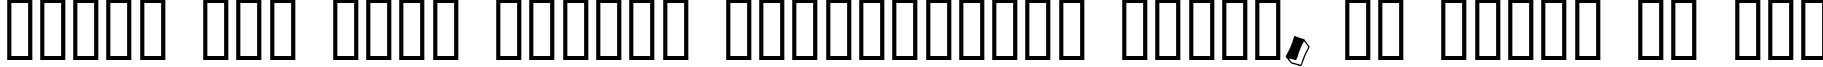 Пример написания шрифтом Duo Dunkel текста на русском